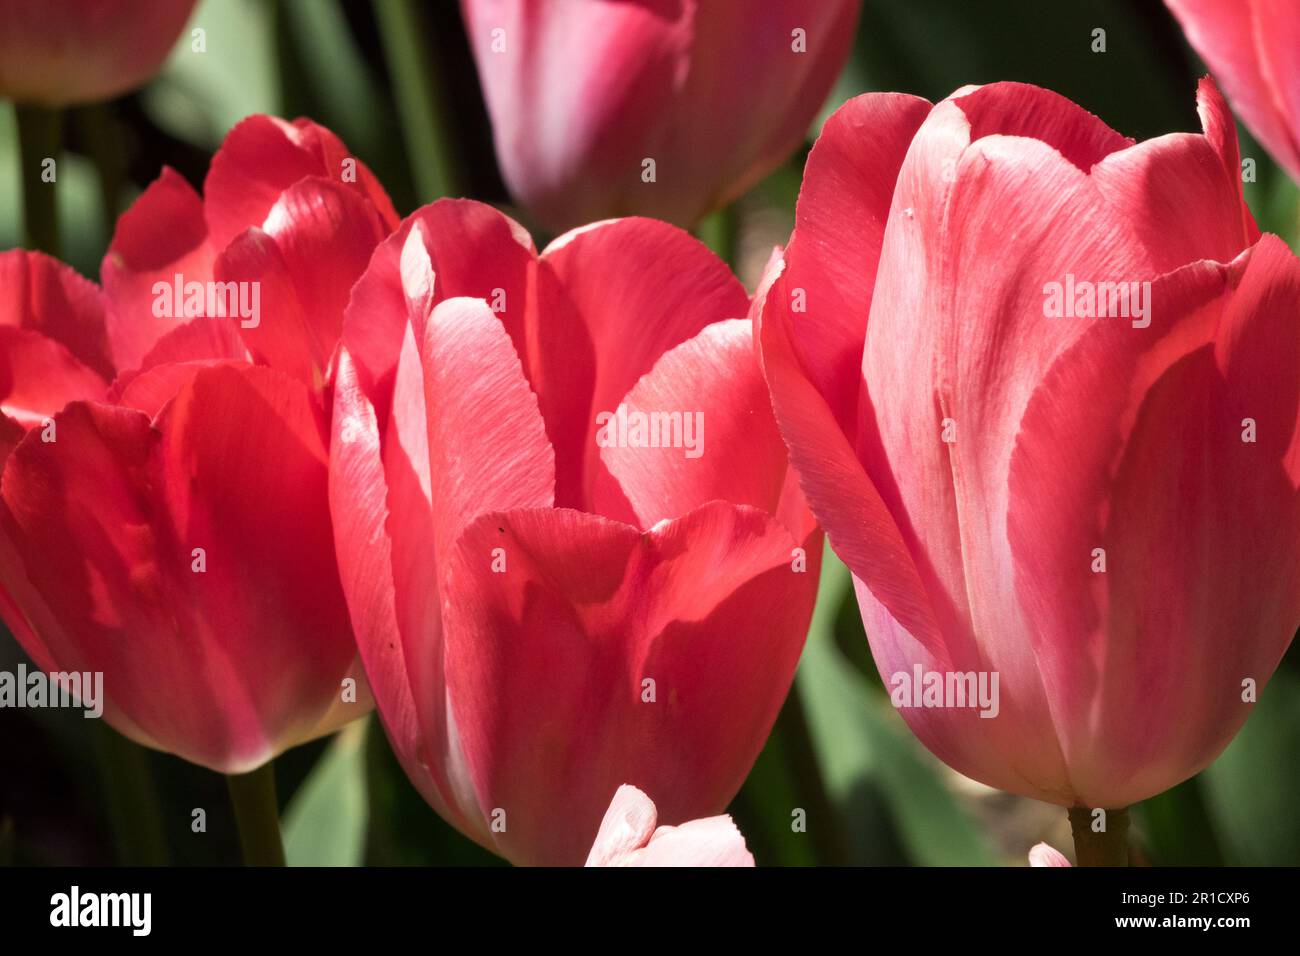 Tulipa 'Van Eijk' Tulip,Red, Pale, Flowers Stock Photo